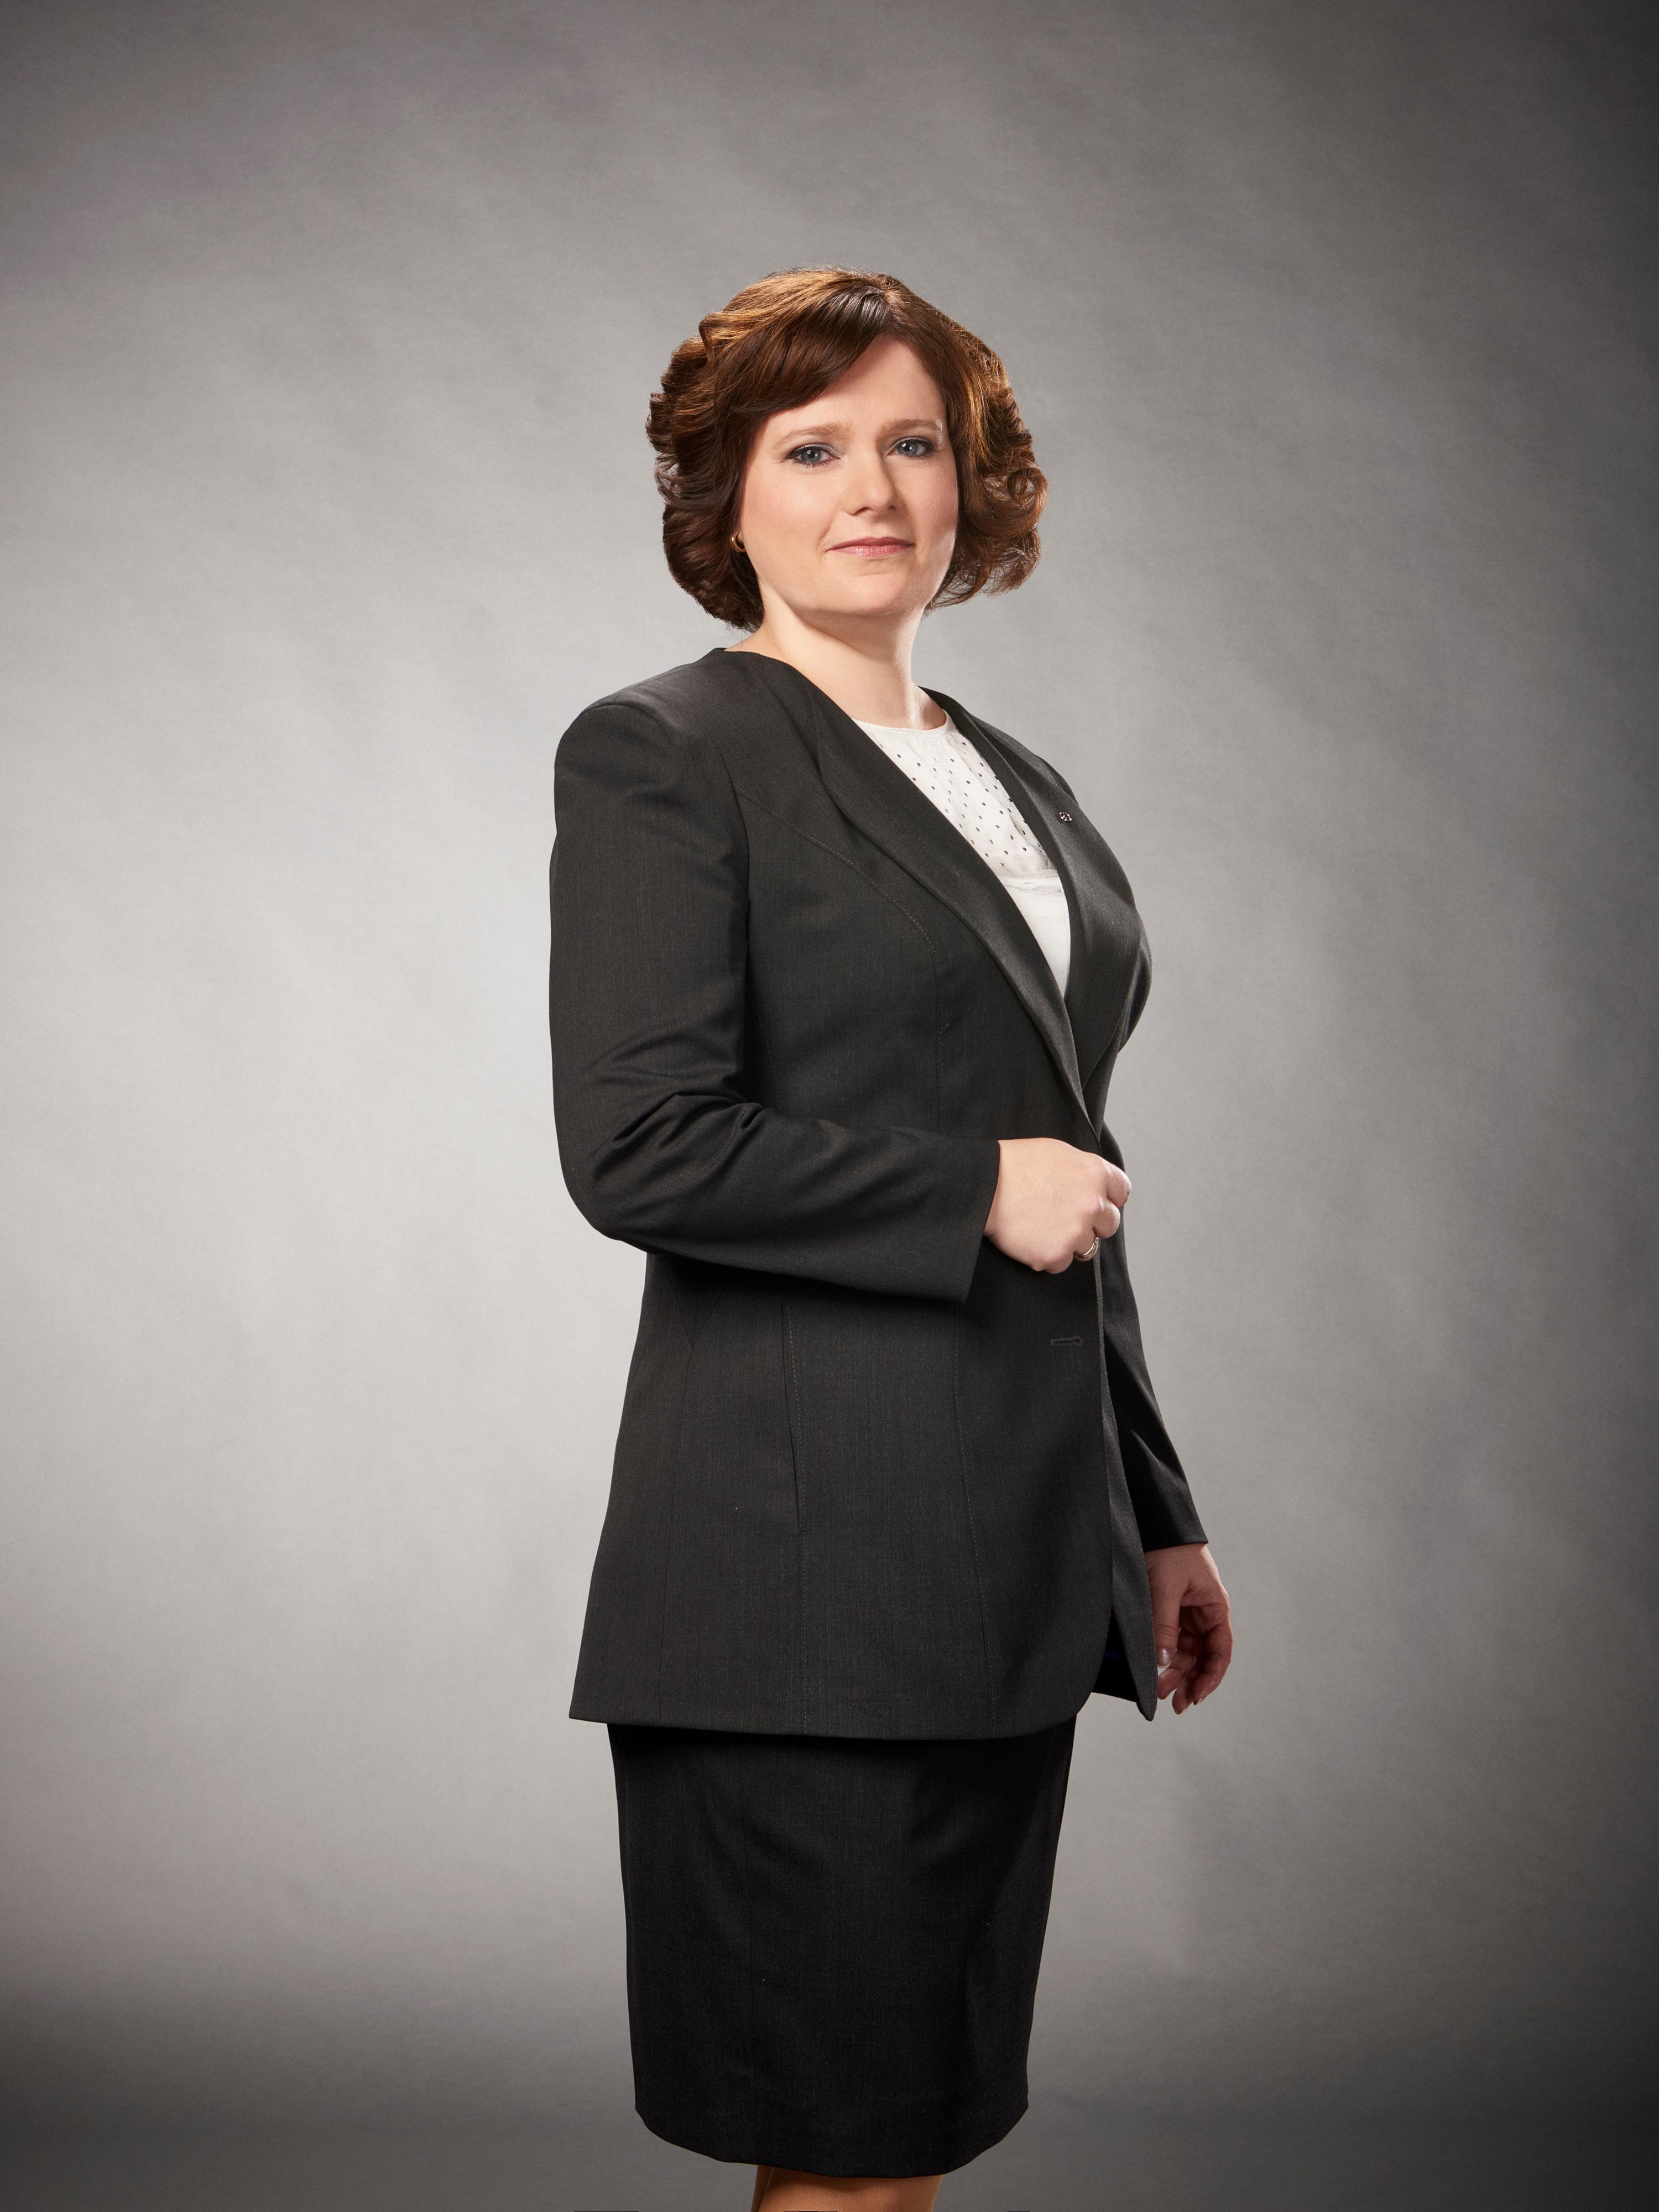 Mrs. Gabriella Heiszler, CEO of SPAR Hungary